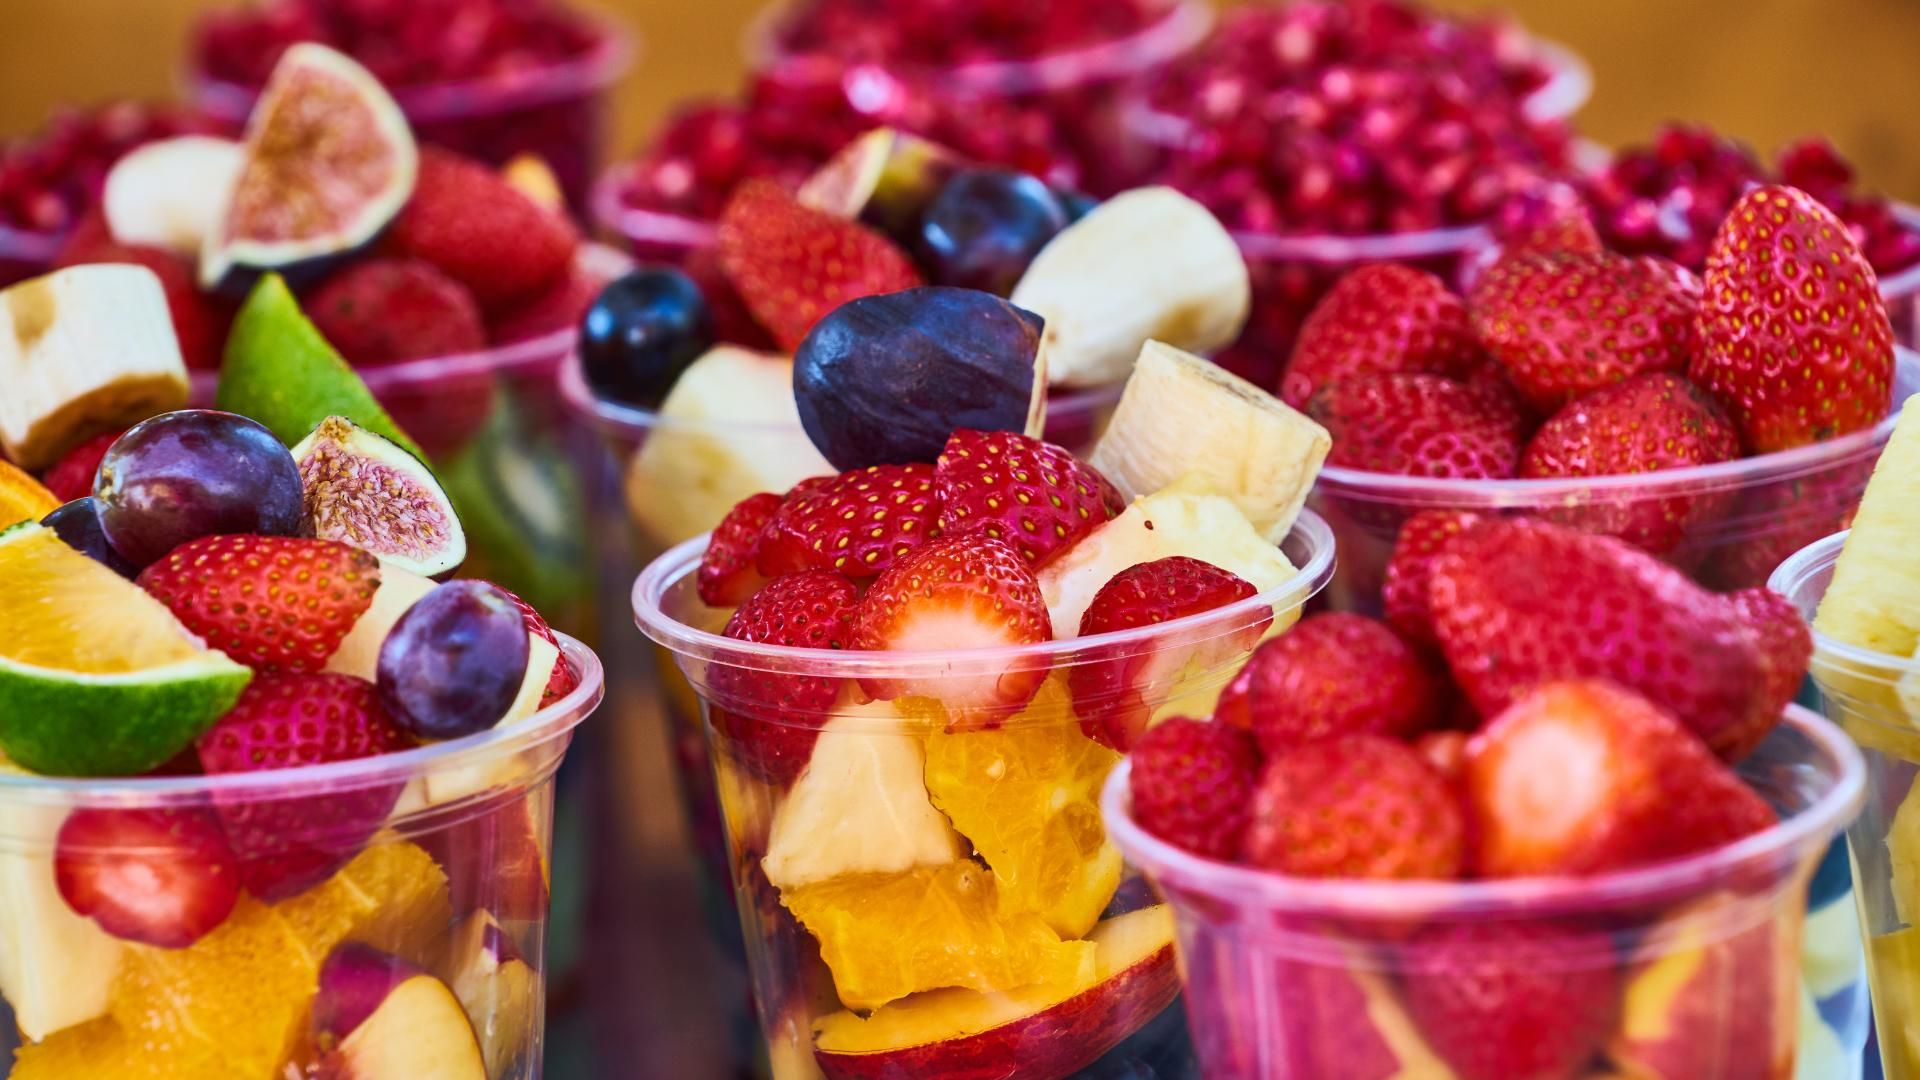 Surtido de frutas listas para consumir.